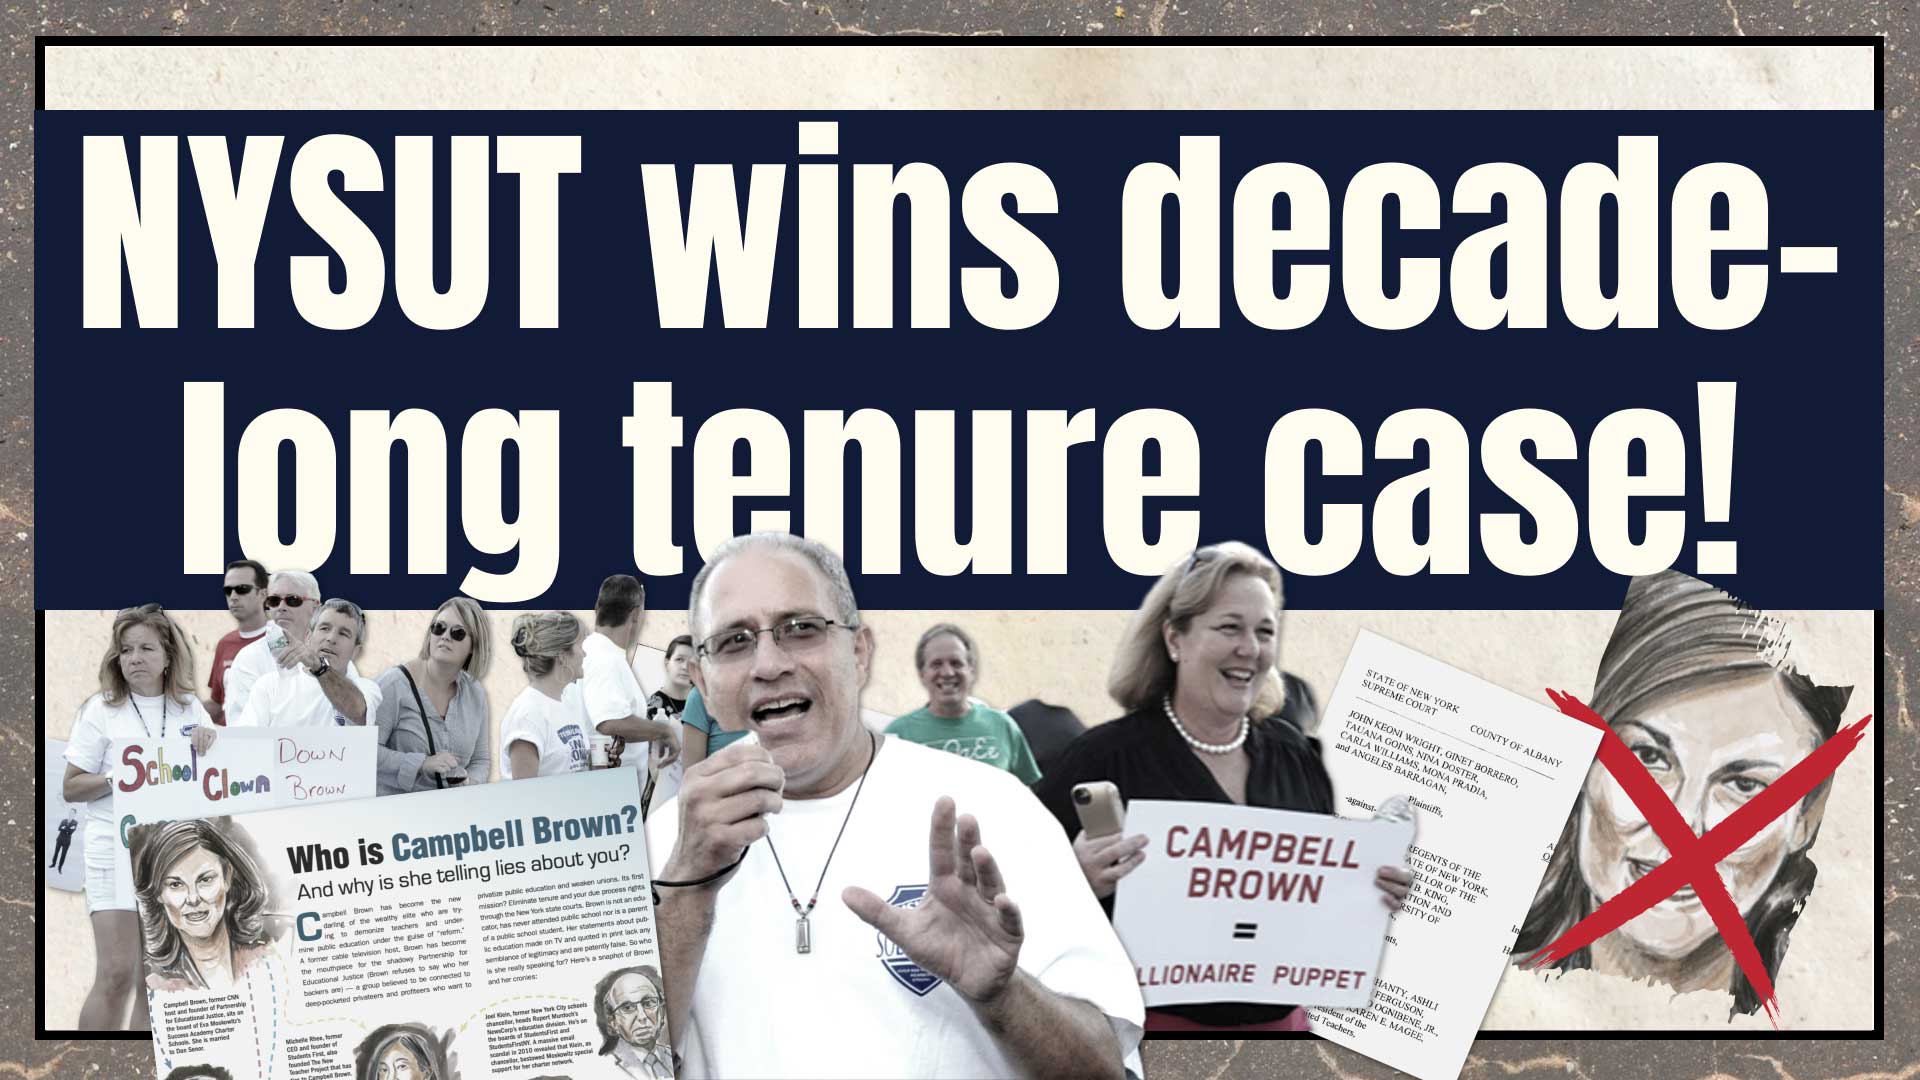 NYSUT wins decade-long tenure case